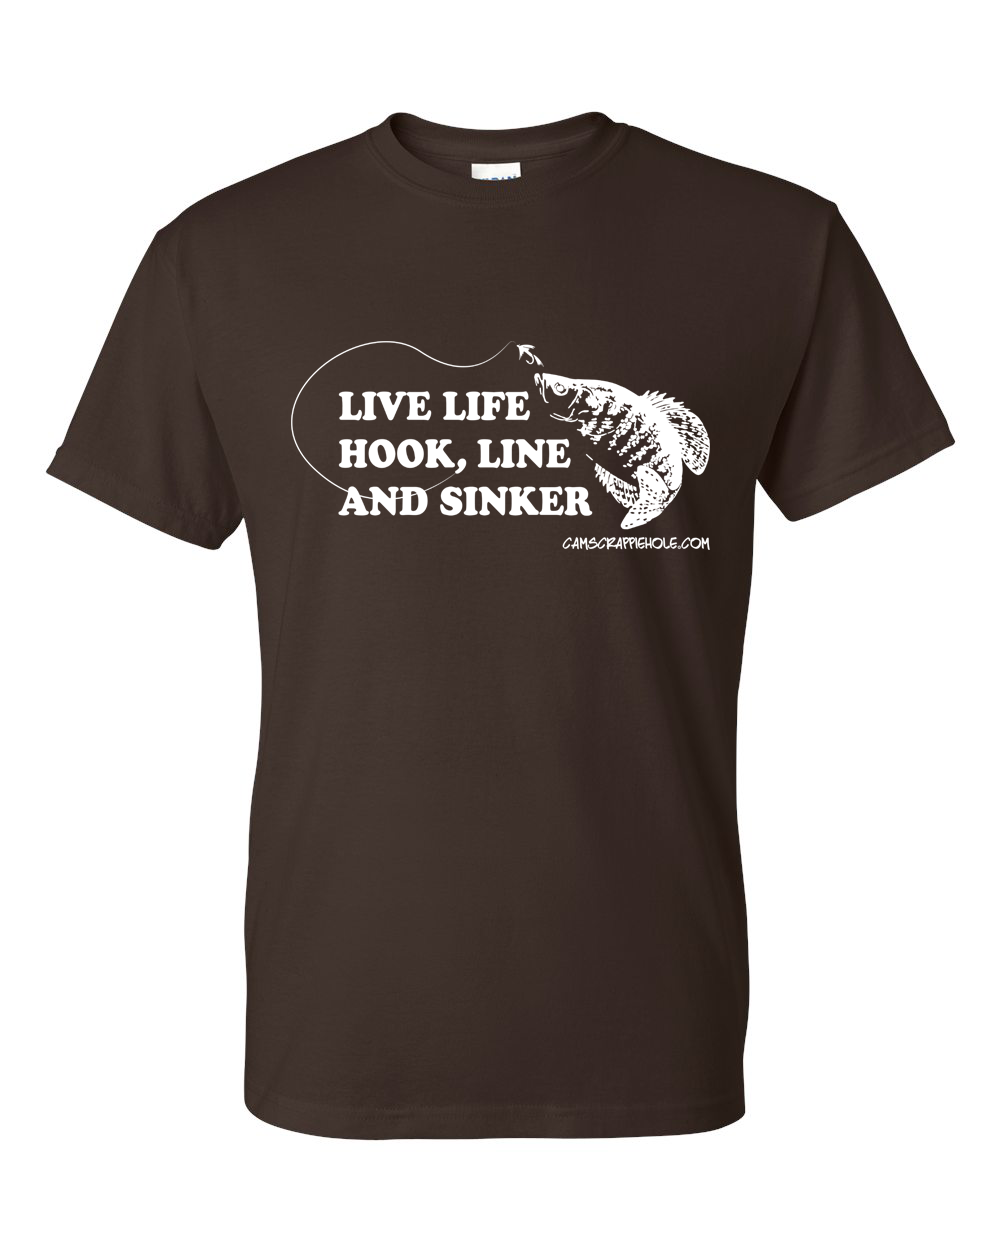 Cam's "Chocolate" Live Life Short Sleeve T-Shirt